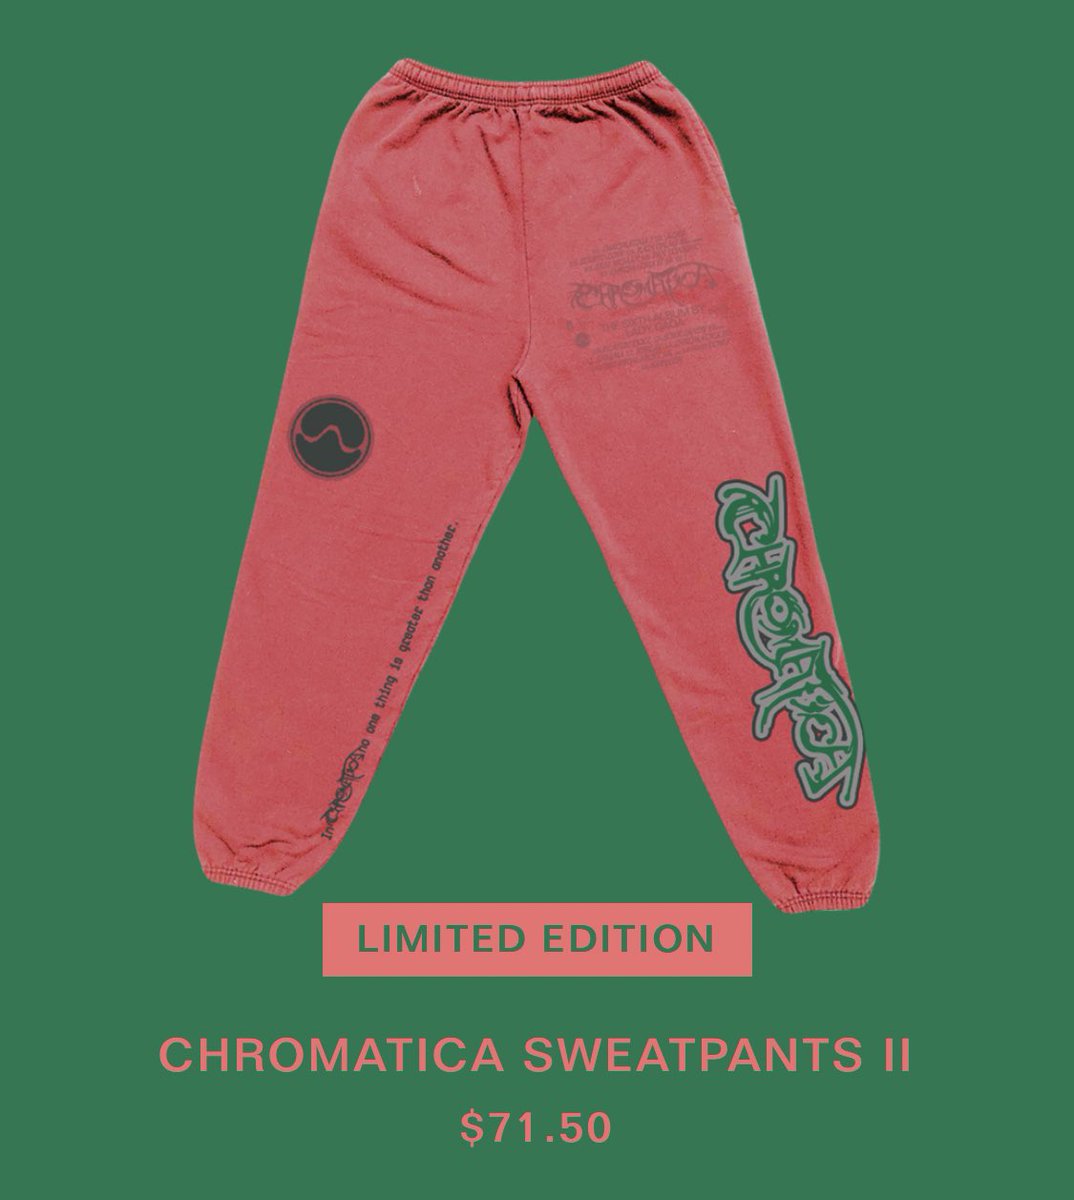 Chromatica sweatpants